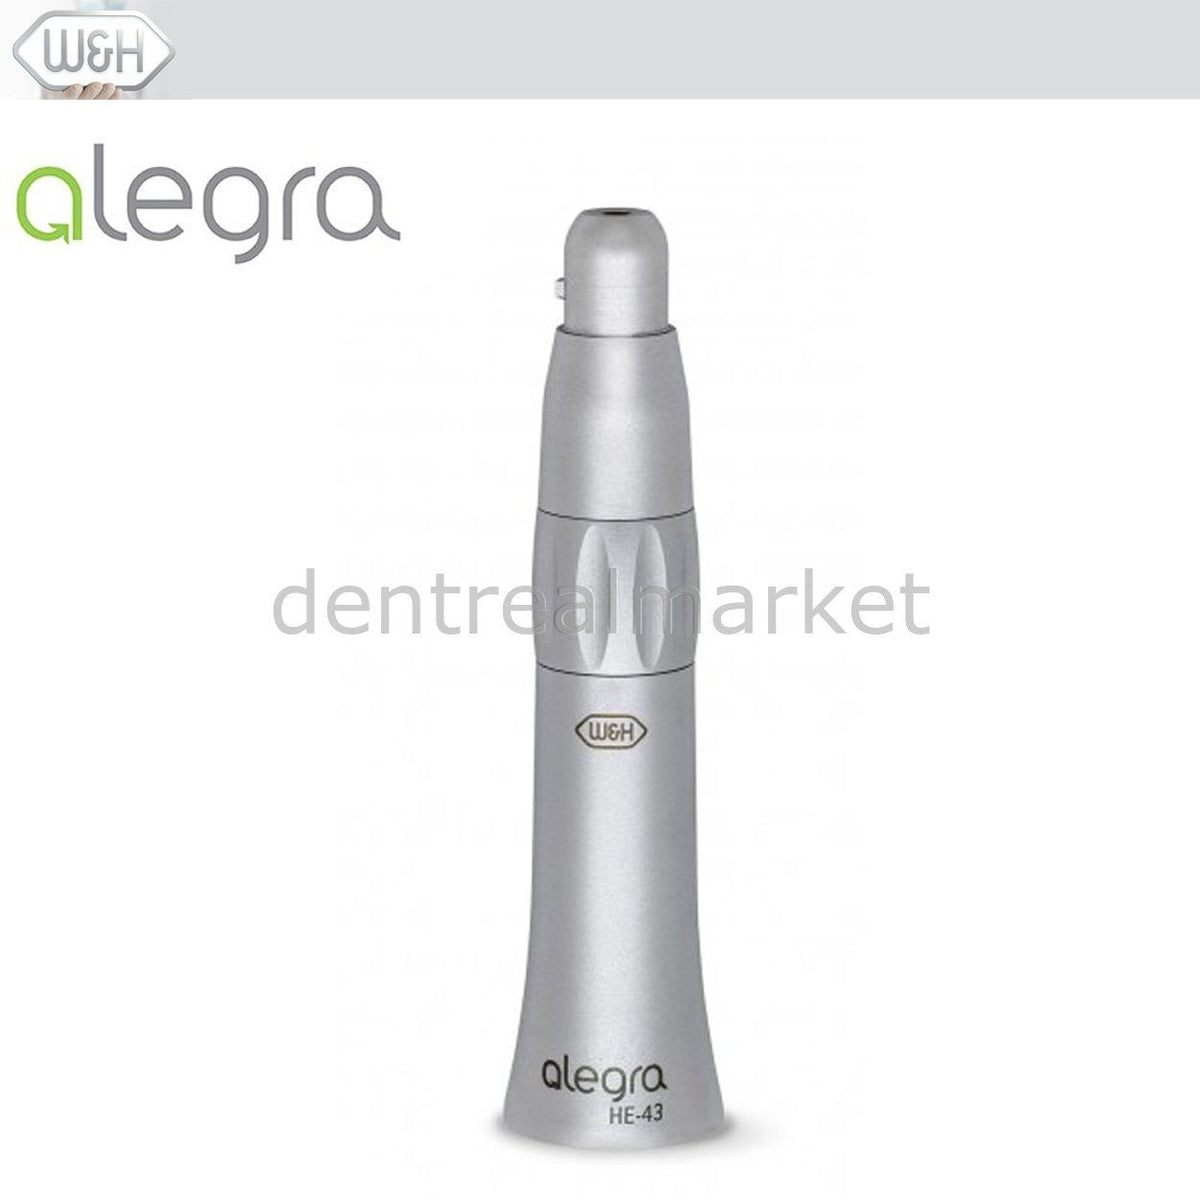 DentrealStore - W&H Dental Alegra Steel Bearing Handpiece - HE-43